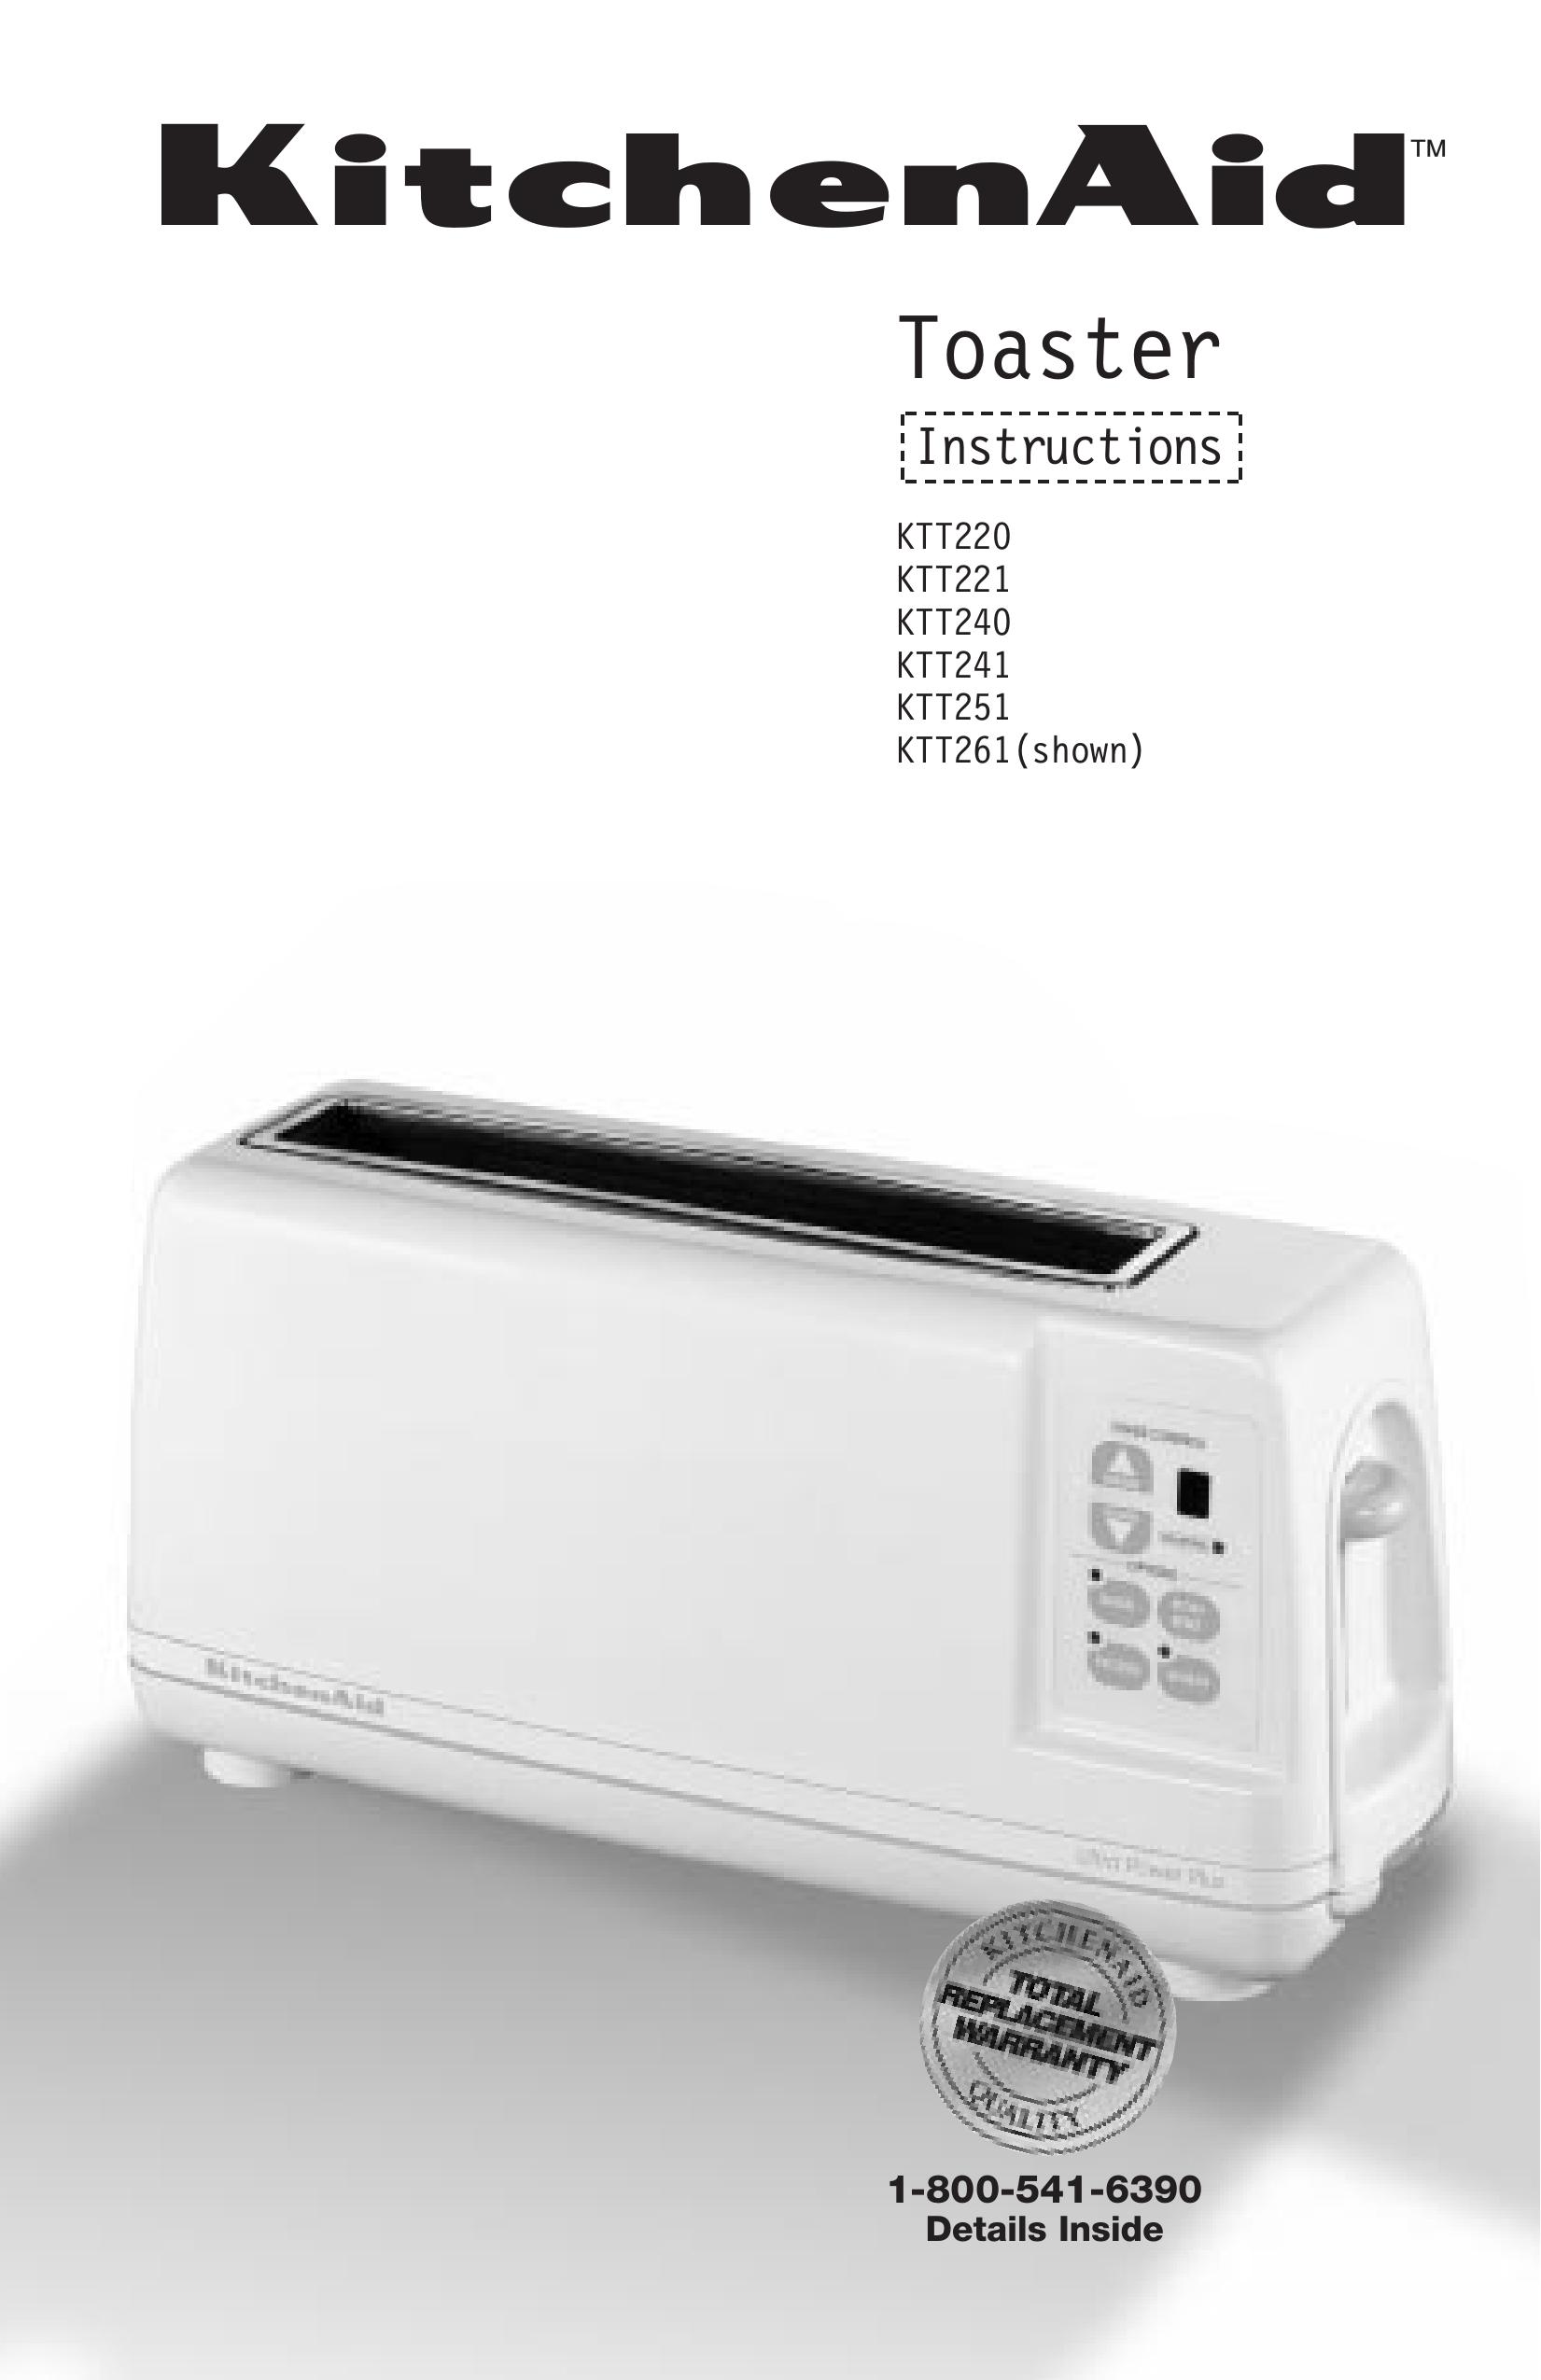 KitchenAid KTT220 Toaster User Manual